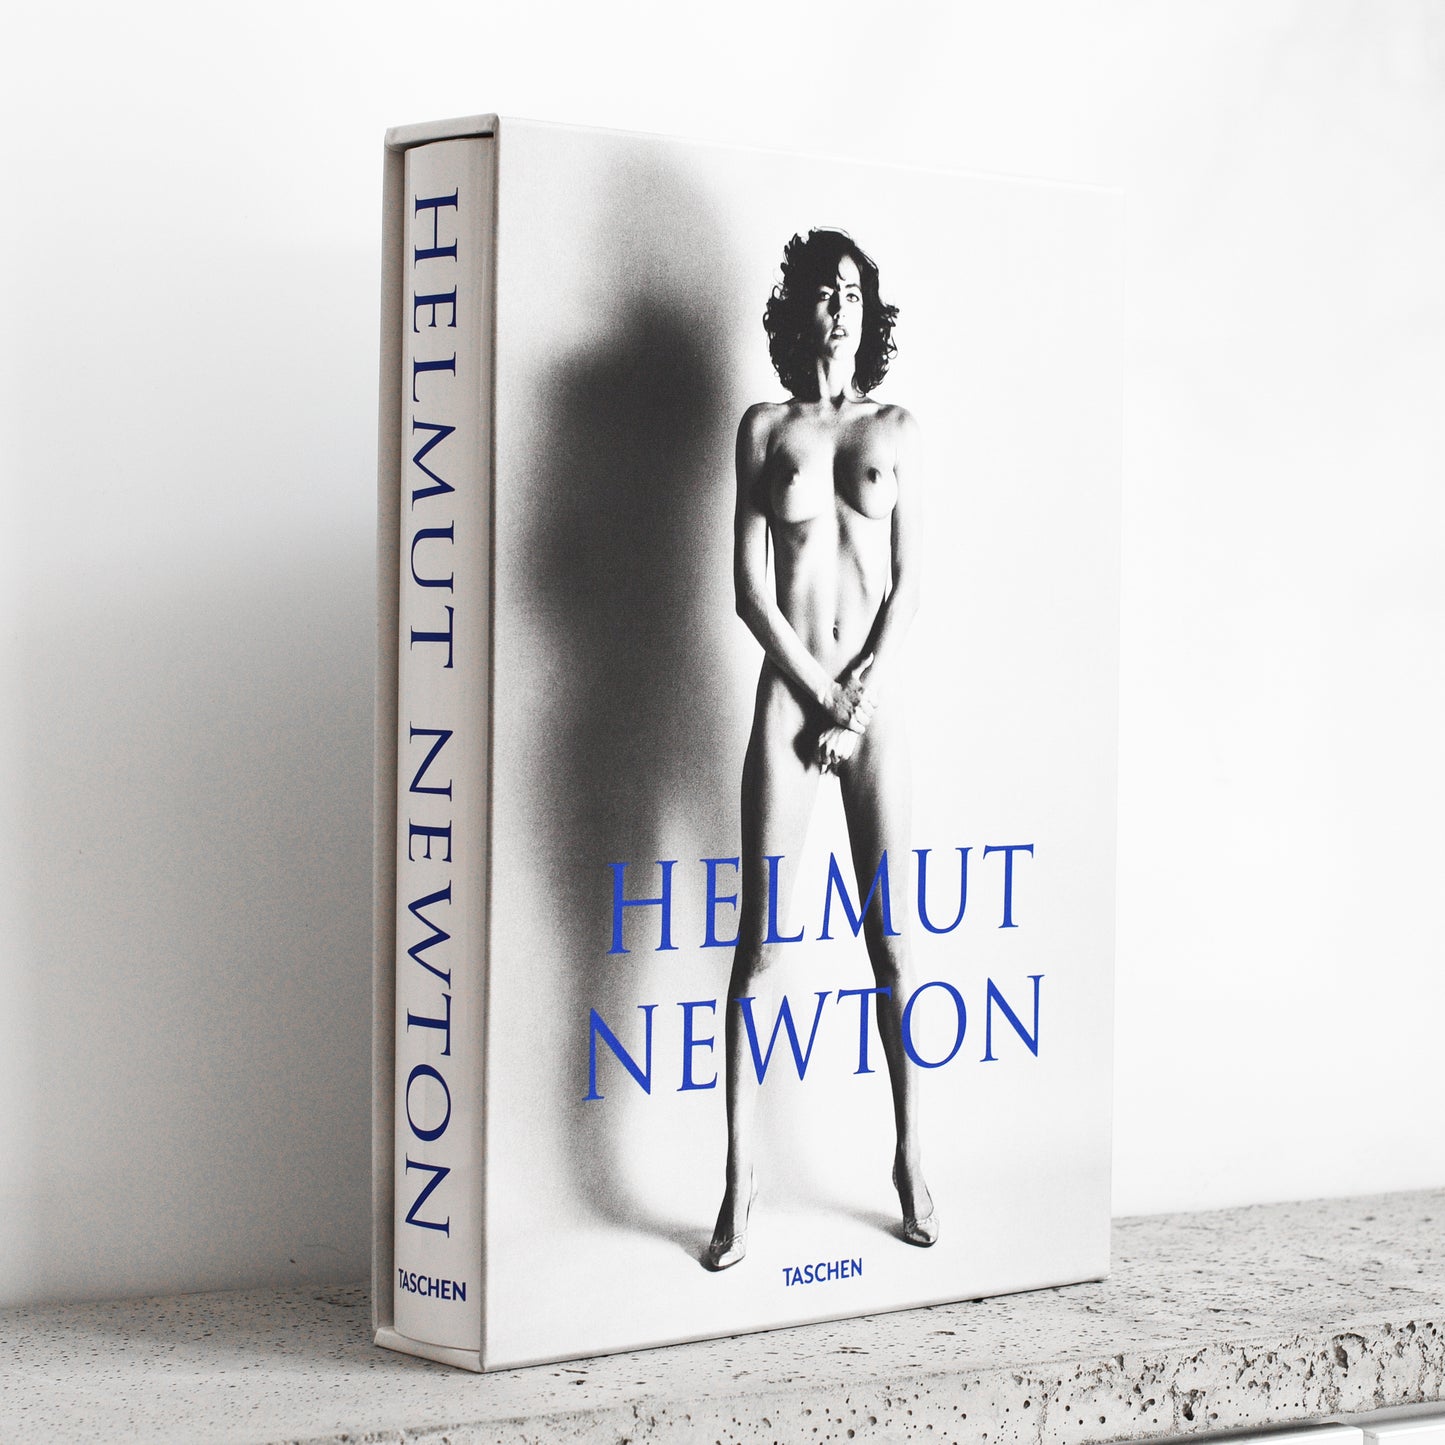 Helmut Newton SUMO 20th Anniversary